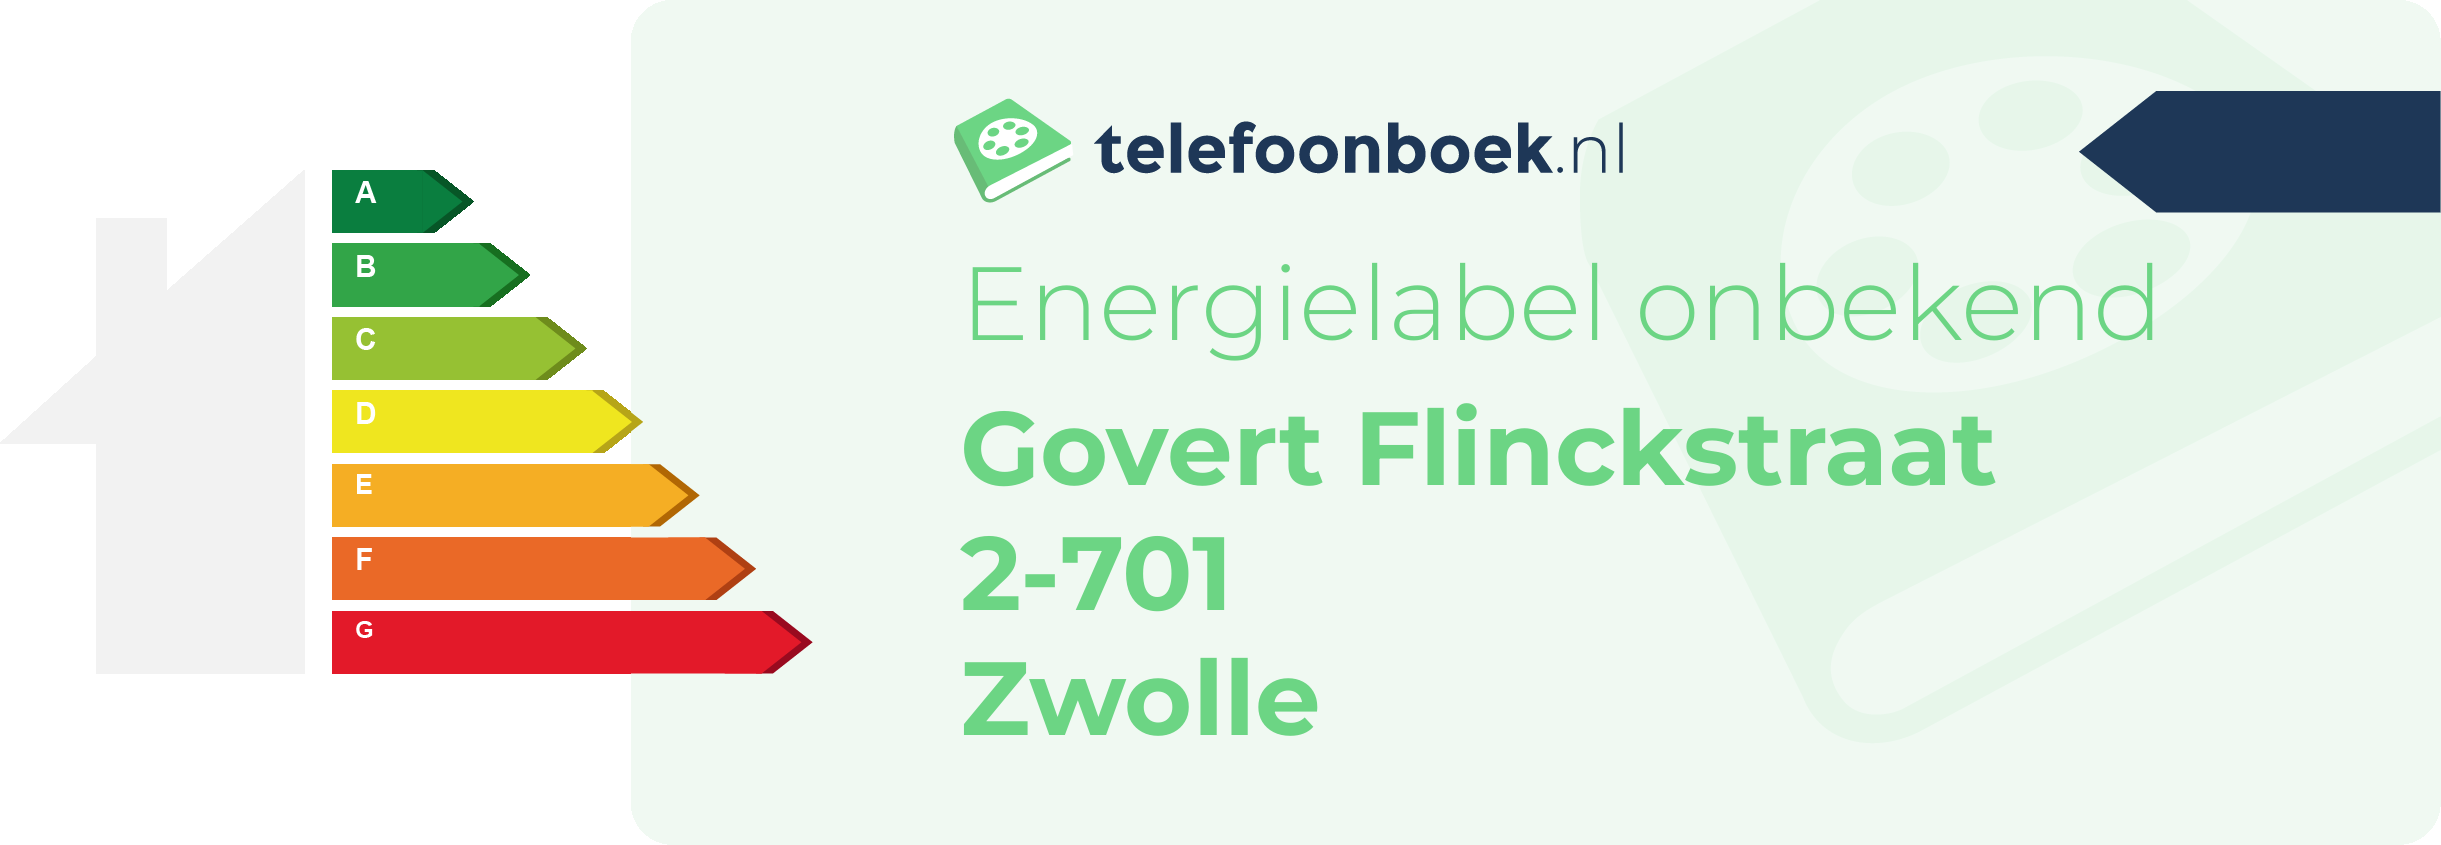 Energielabel Govert Flinckstraat 2-701 Zwolle